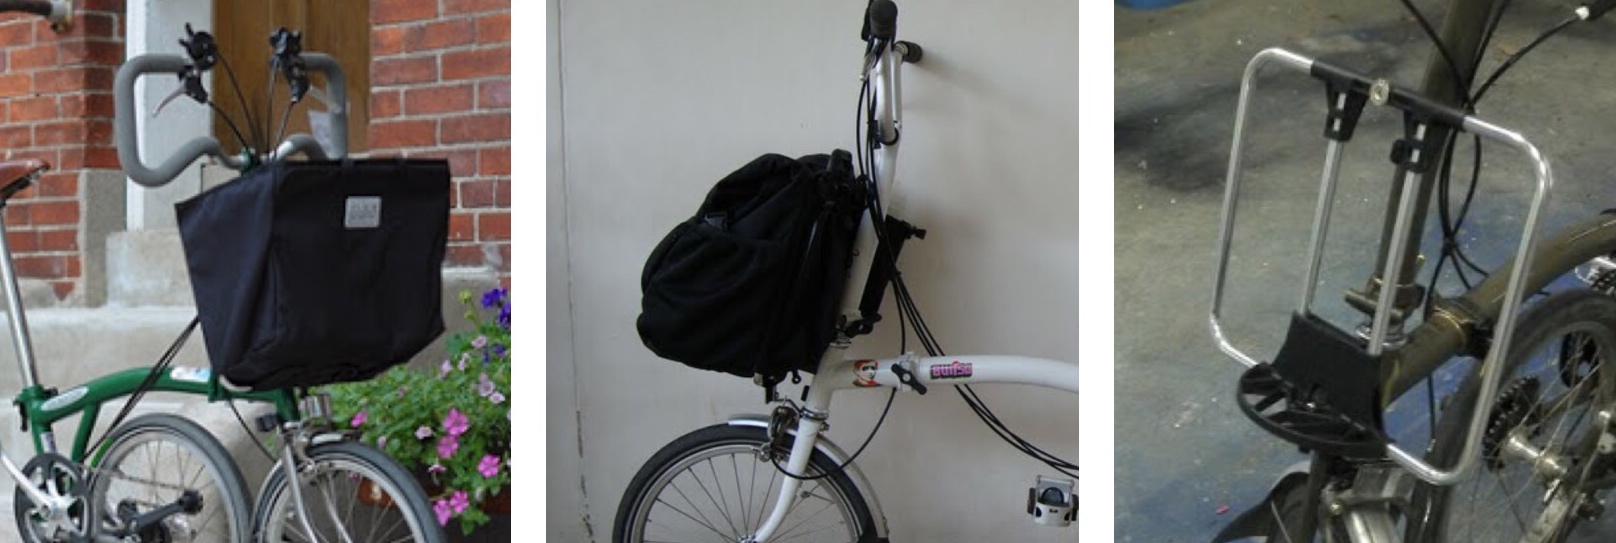 Review: Restrap City Loader bike bag | Cycling UK